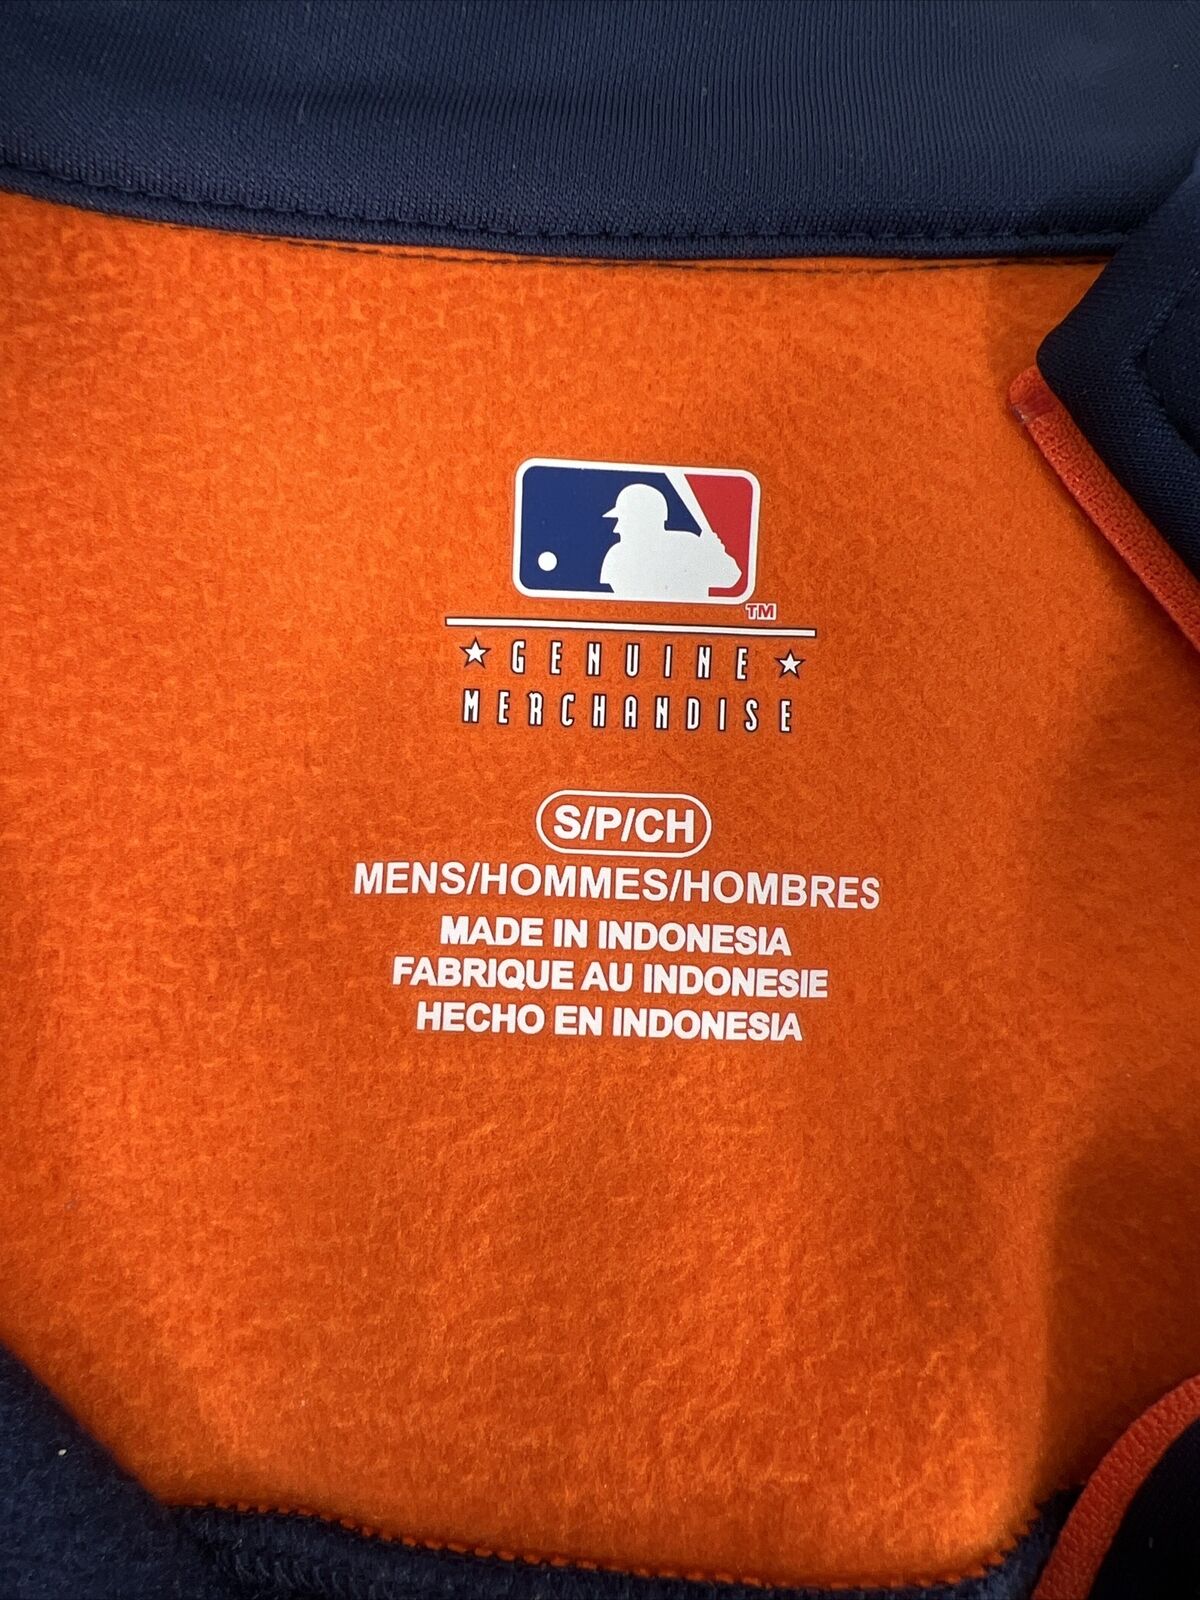 MLB Genuine Merchandise Men's Blue Detroit Tigers Pullover Sweatshirt - S